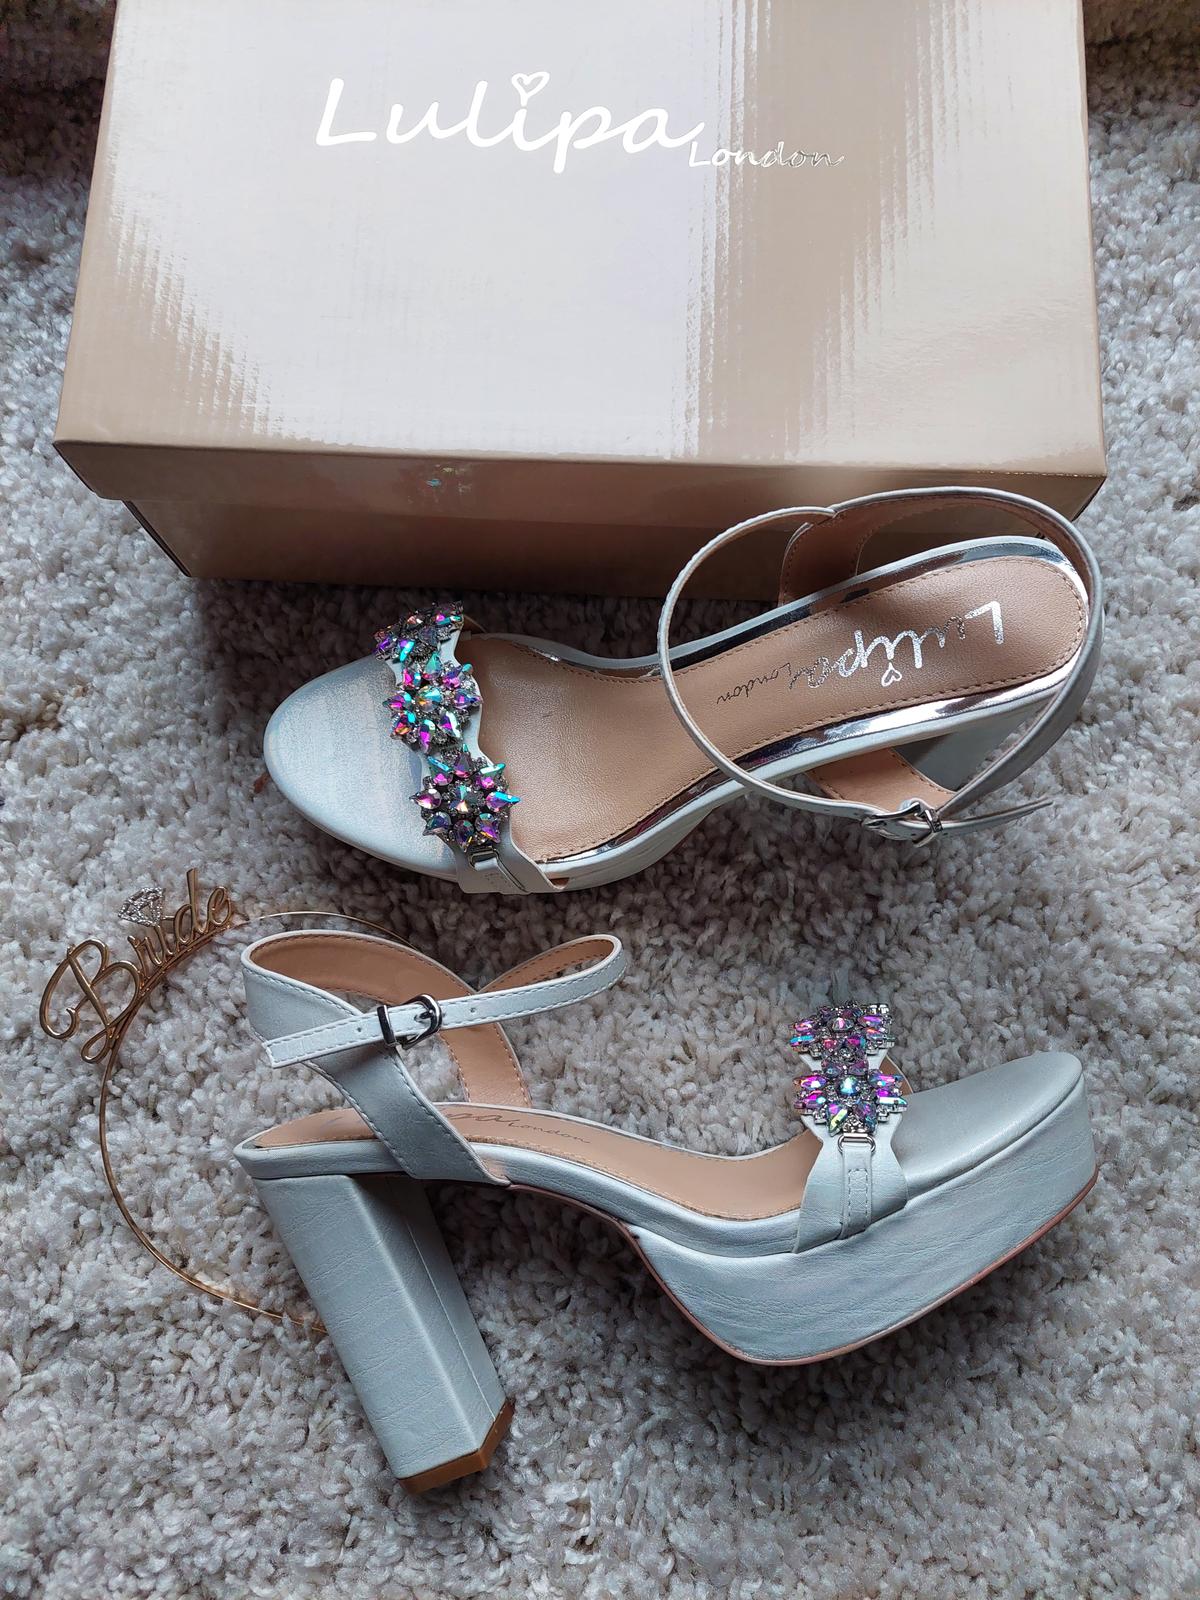 luxusni svatebni boty s krystaly vel.41 - Obrázek č. 1